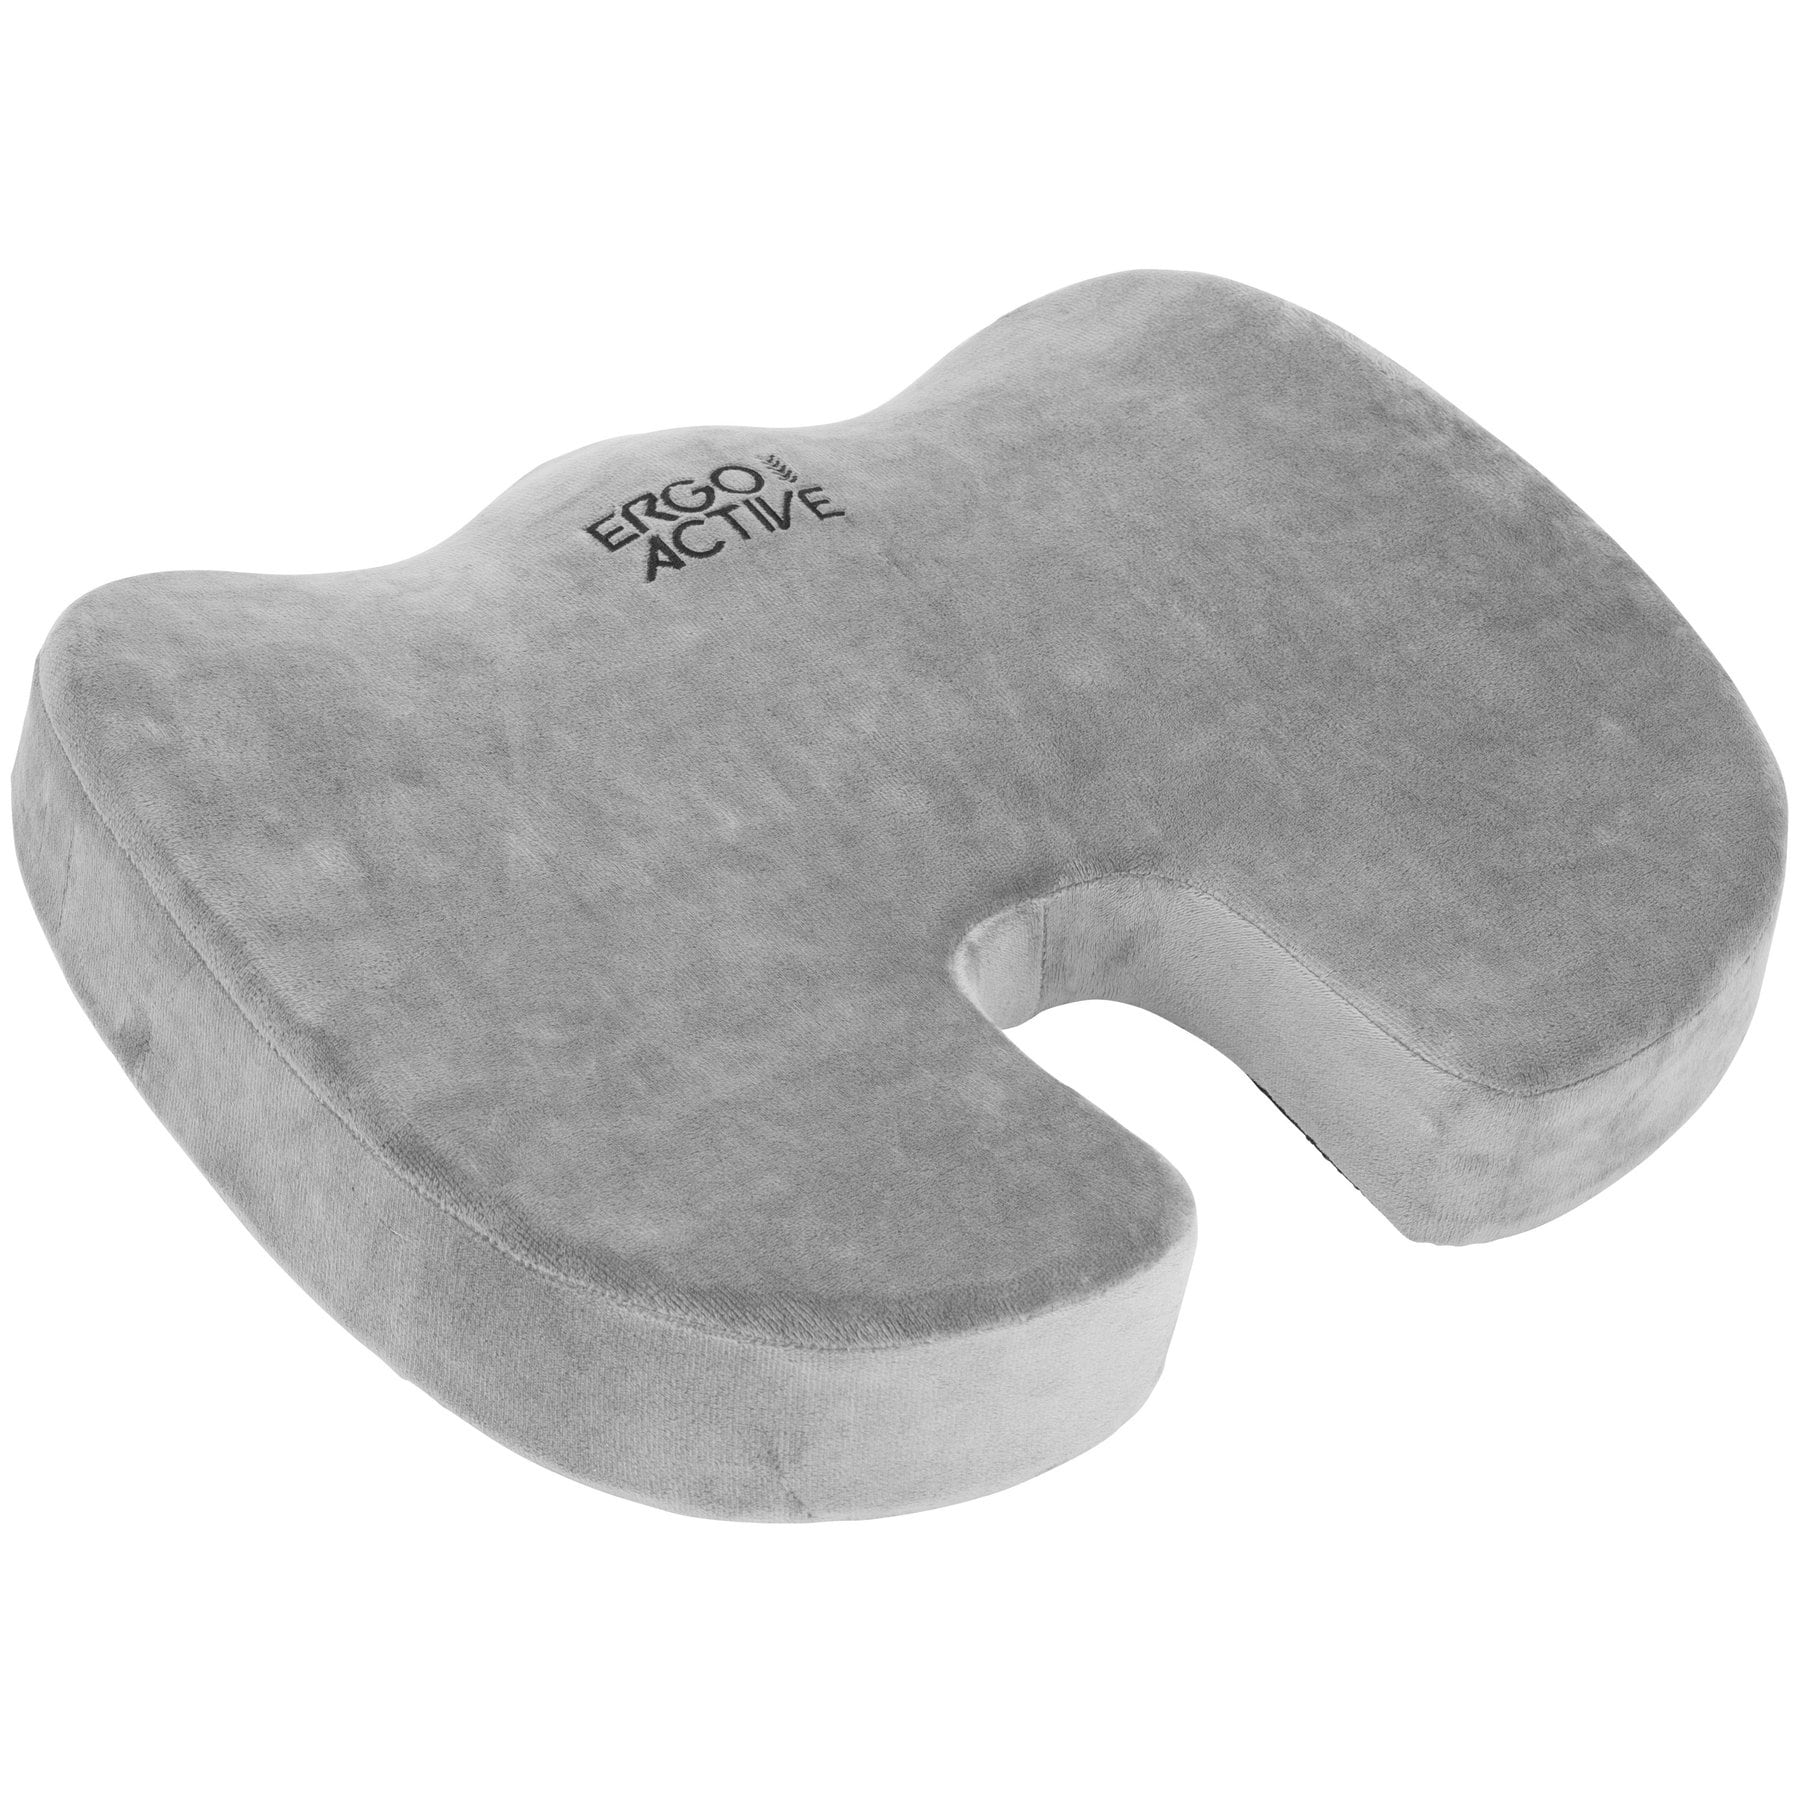 ComfiLife Gel Enhanced Seat Cushion & Lumbar Support Bundle - Office Chair  & Car Seat Cushion for Back Pain & Sciatica Relief - 100% Memory Foam 